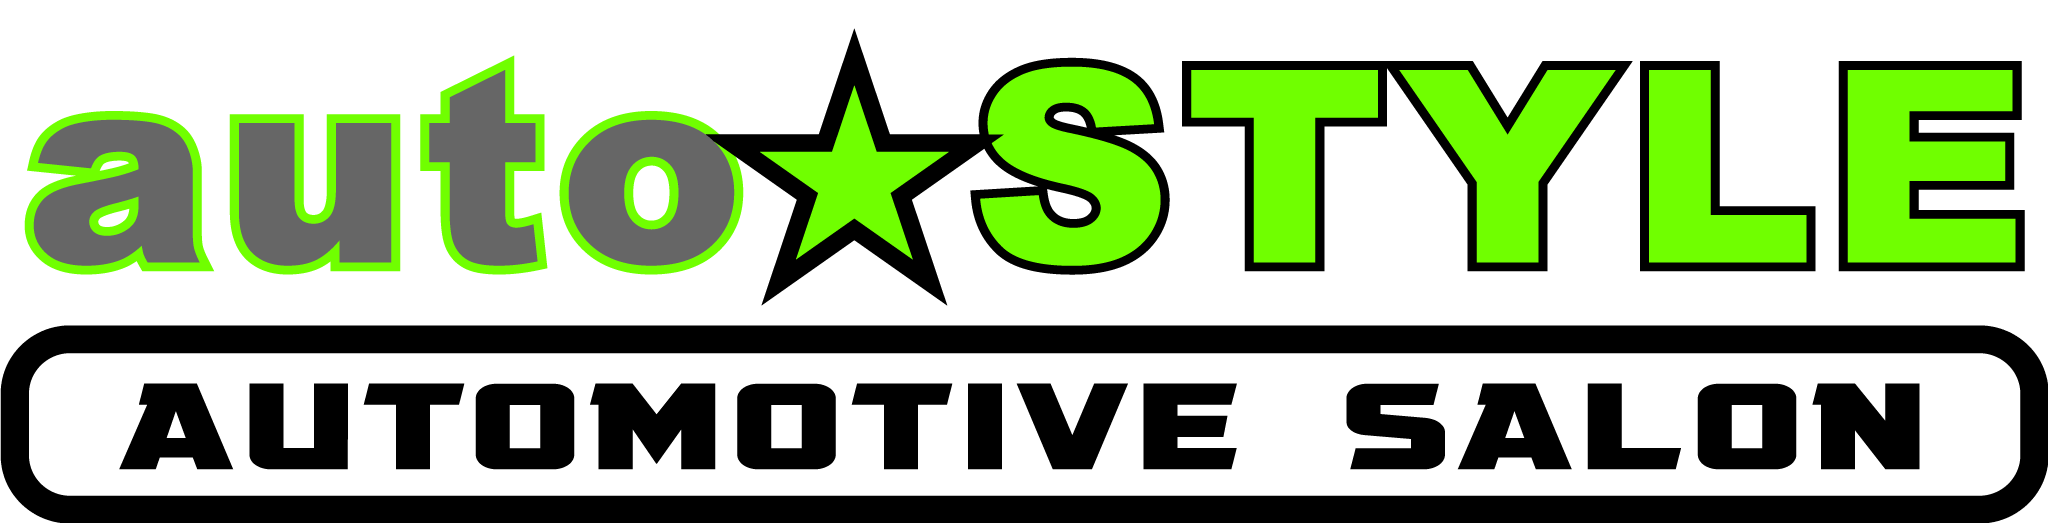 autostyle logo 